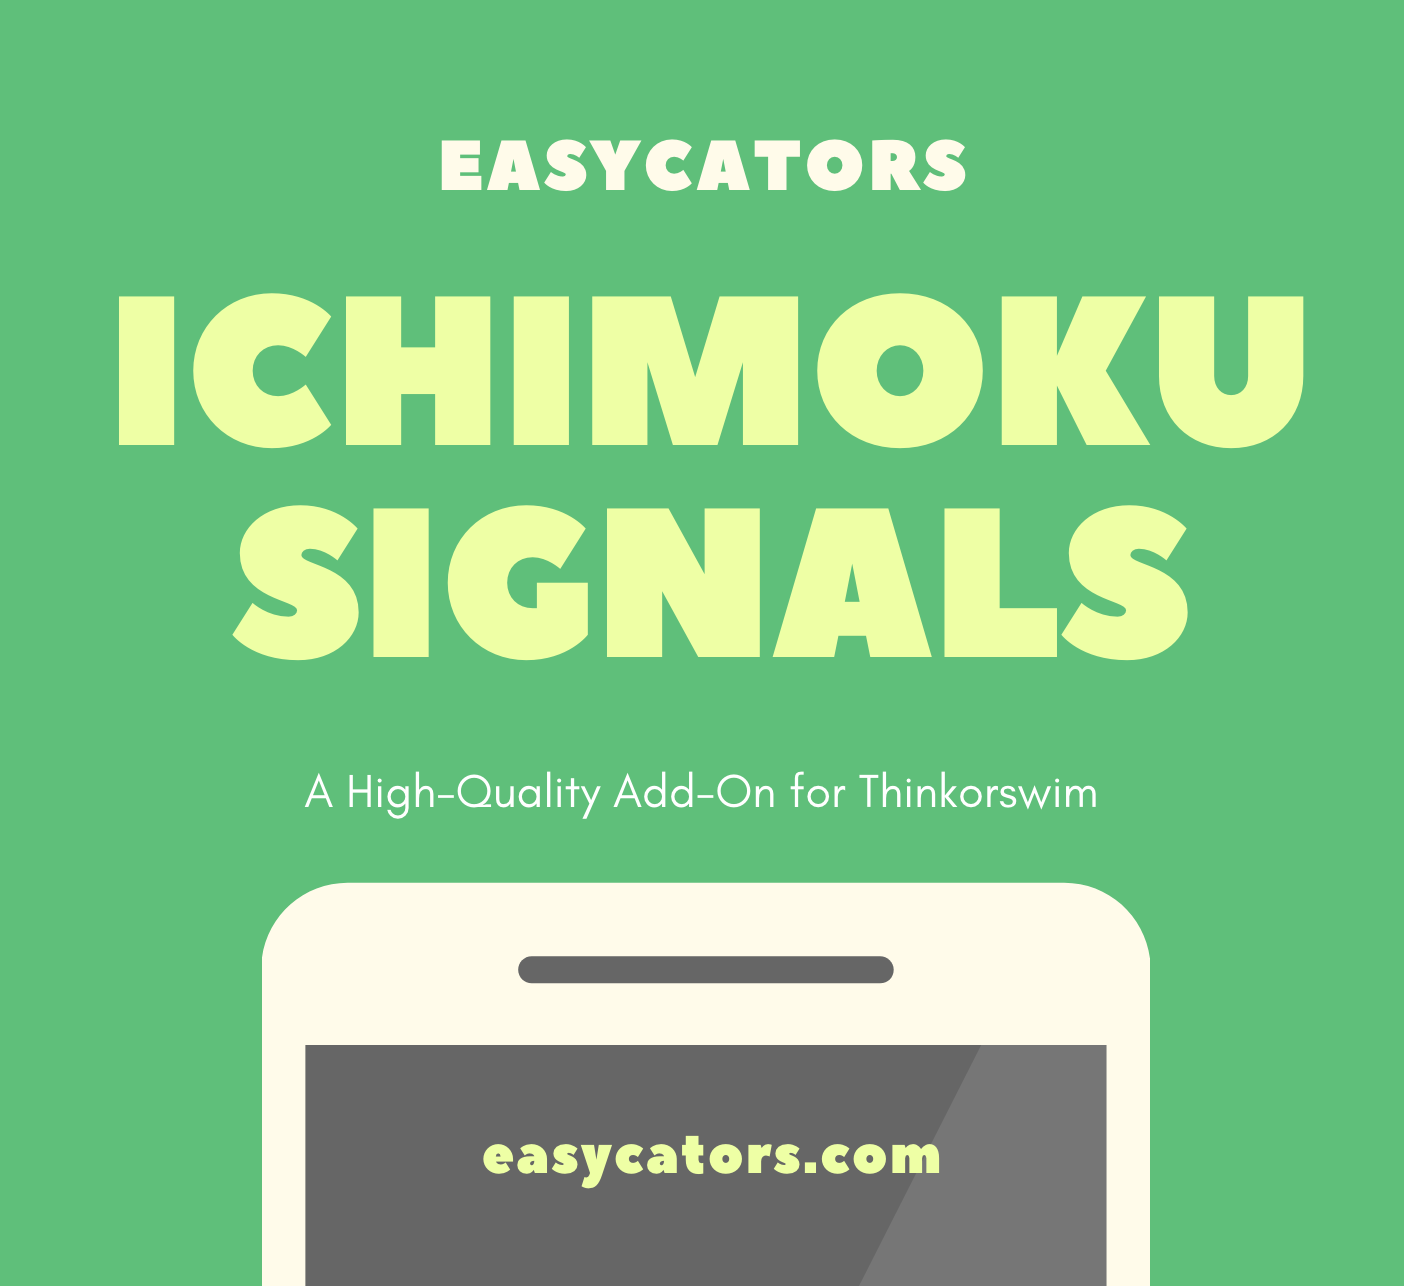 Ichimoku Trading Signals for Thinkorswim - Includes ...